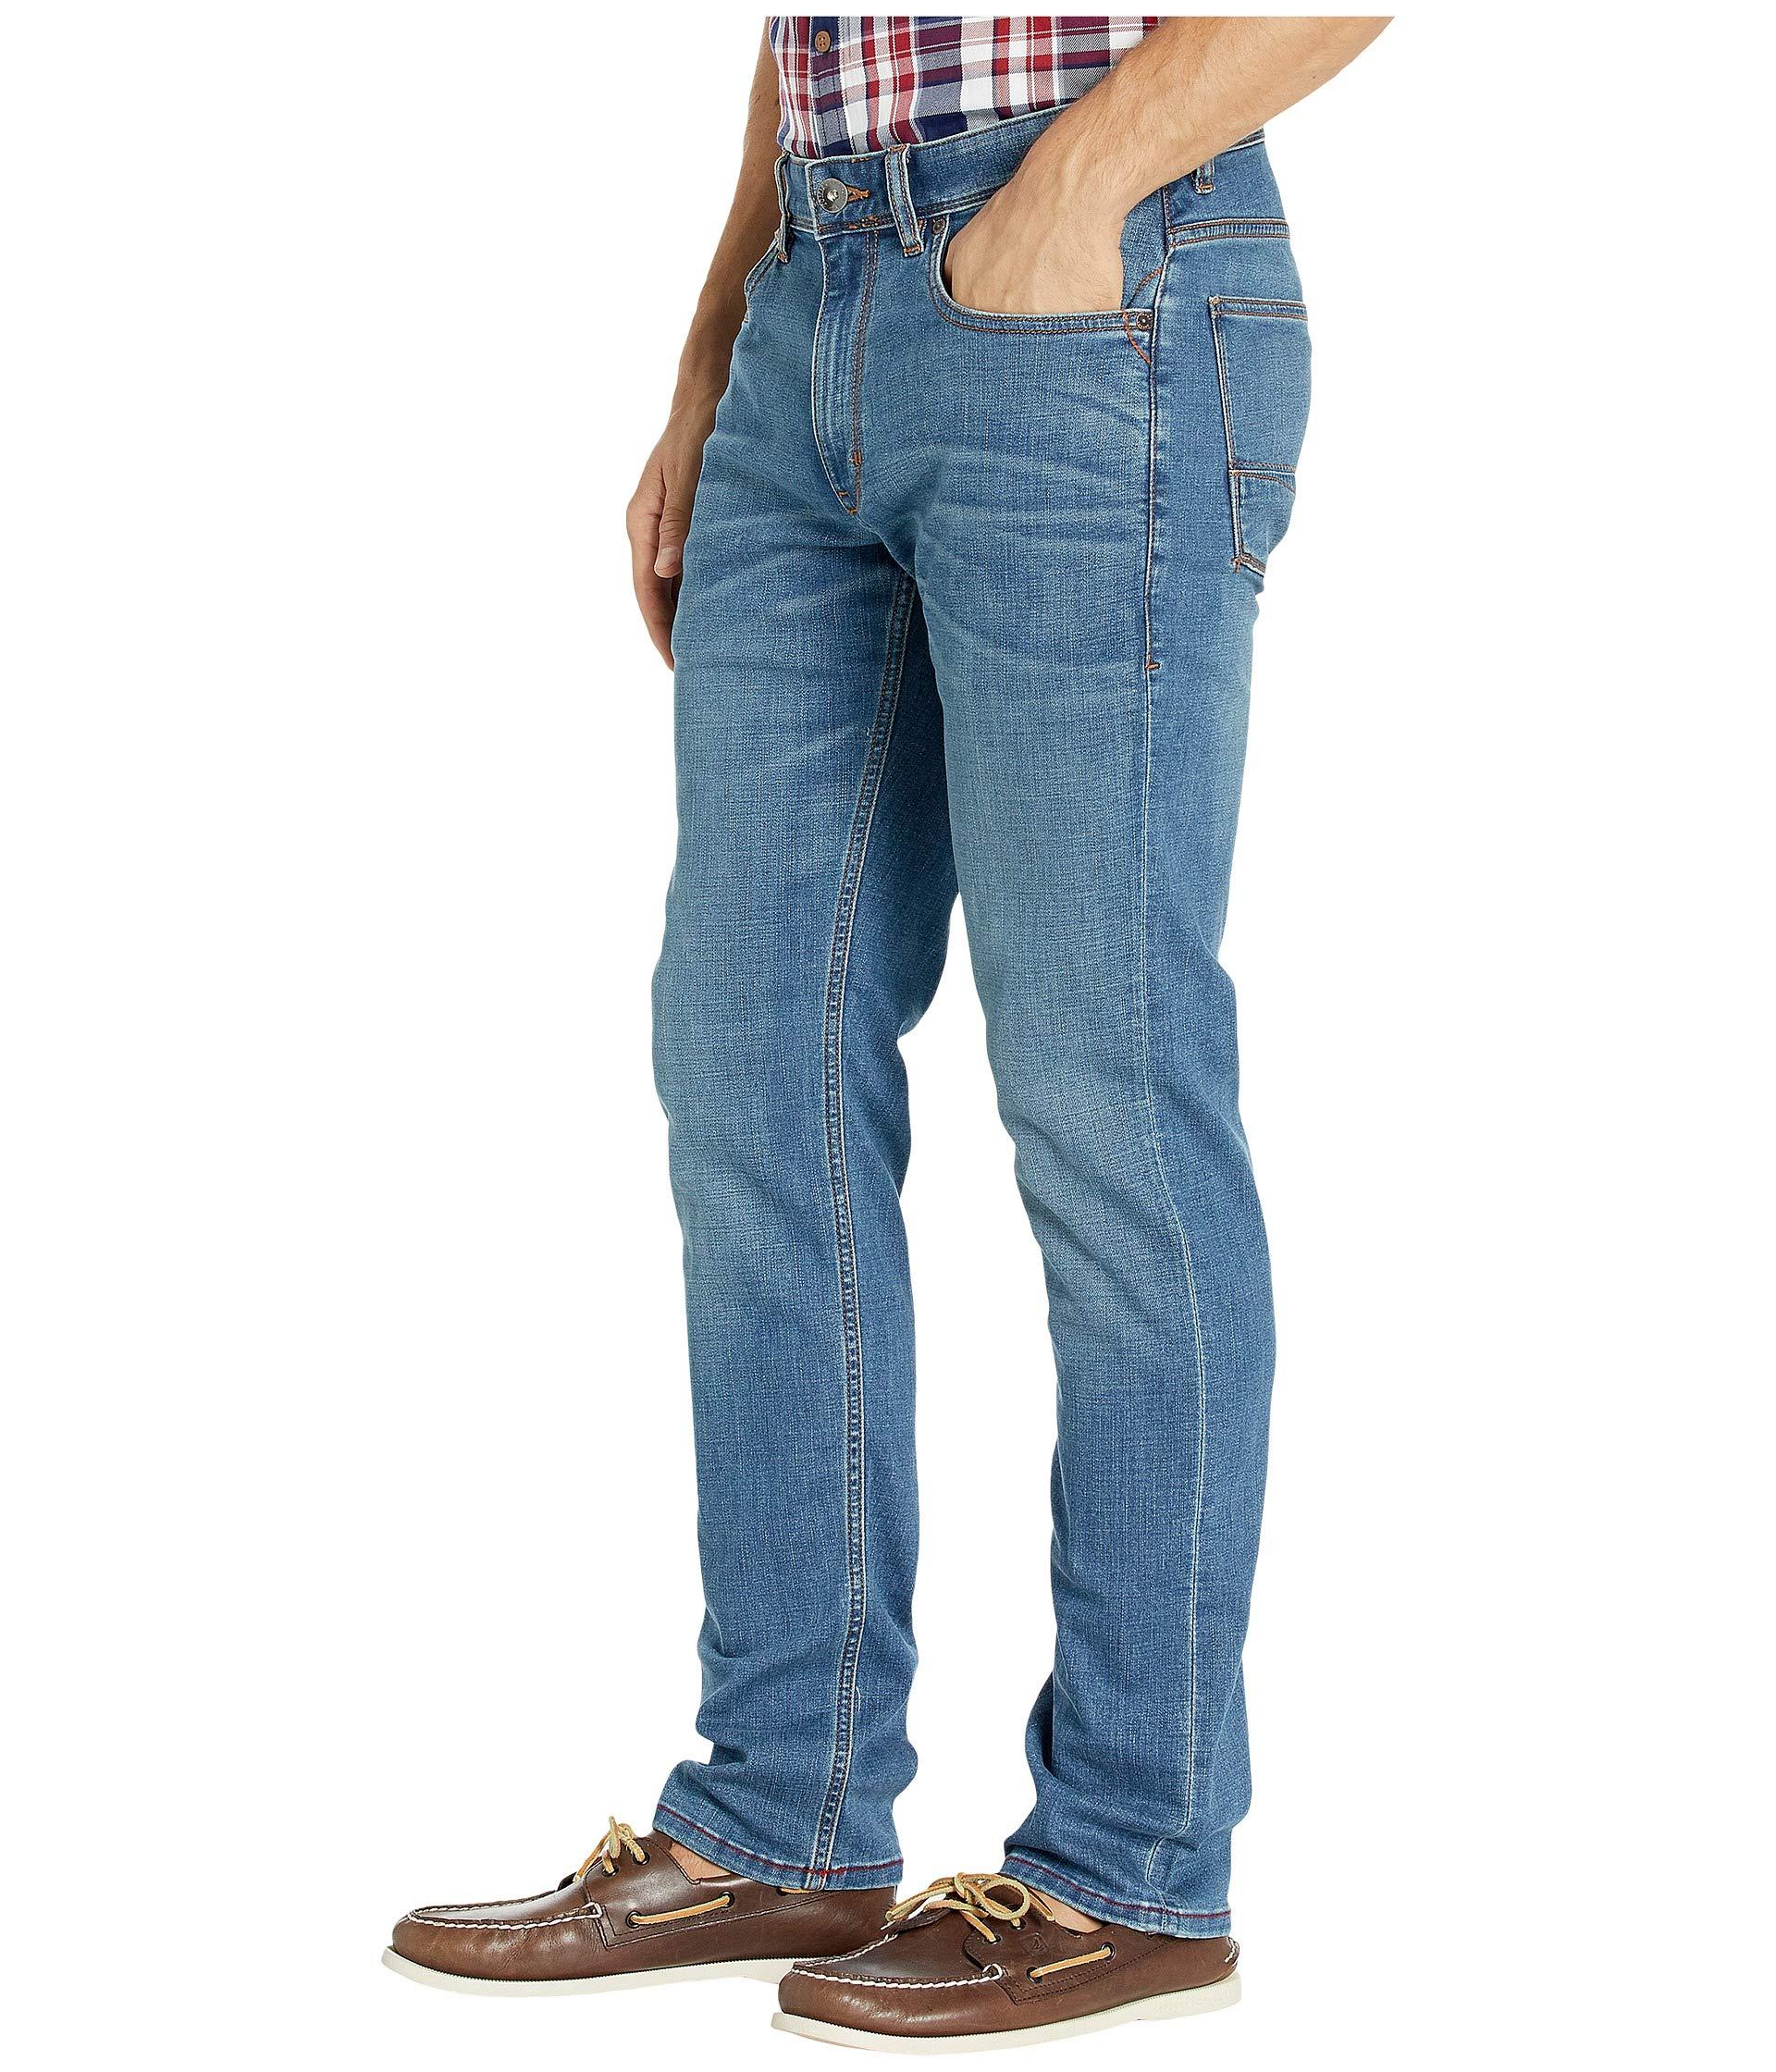 Tommy Bahama Denim Boracay Jeans in Blue for Men - Lyst